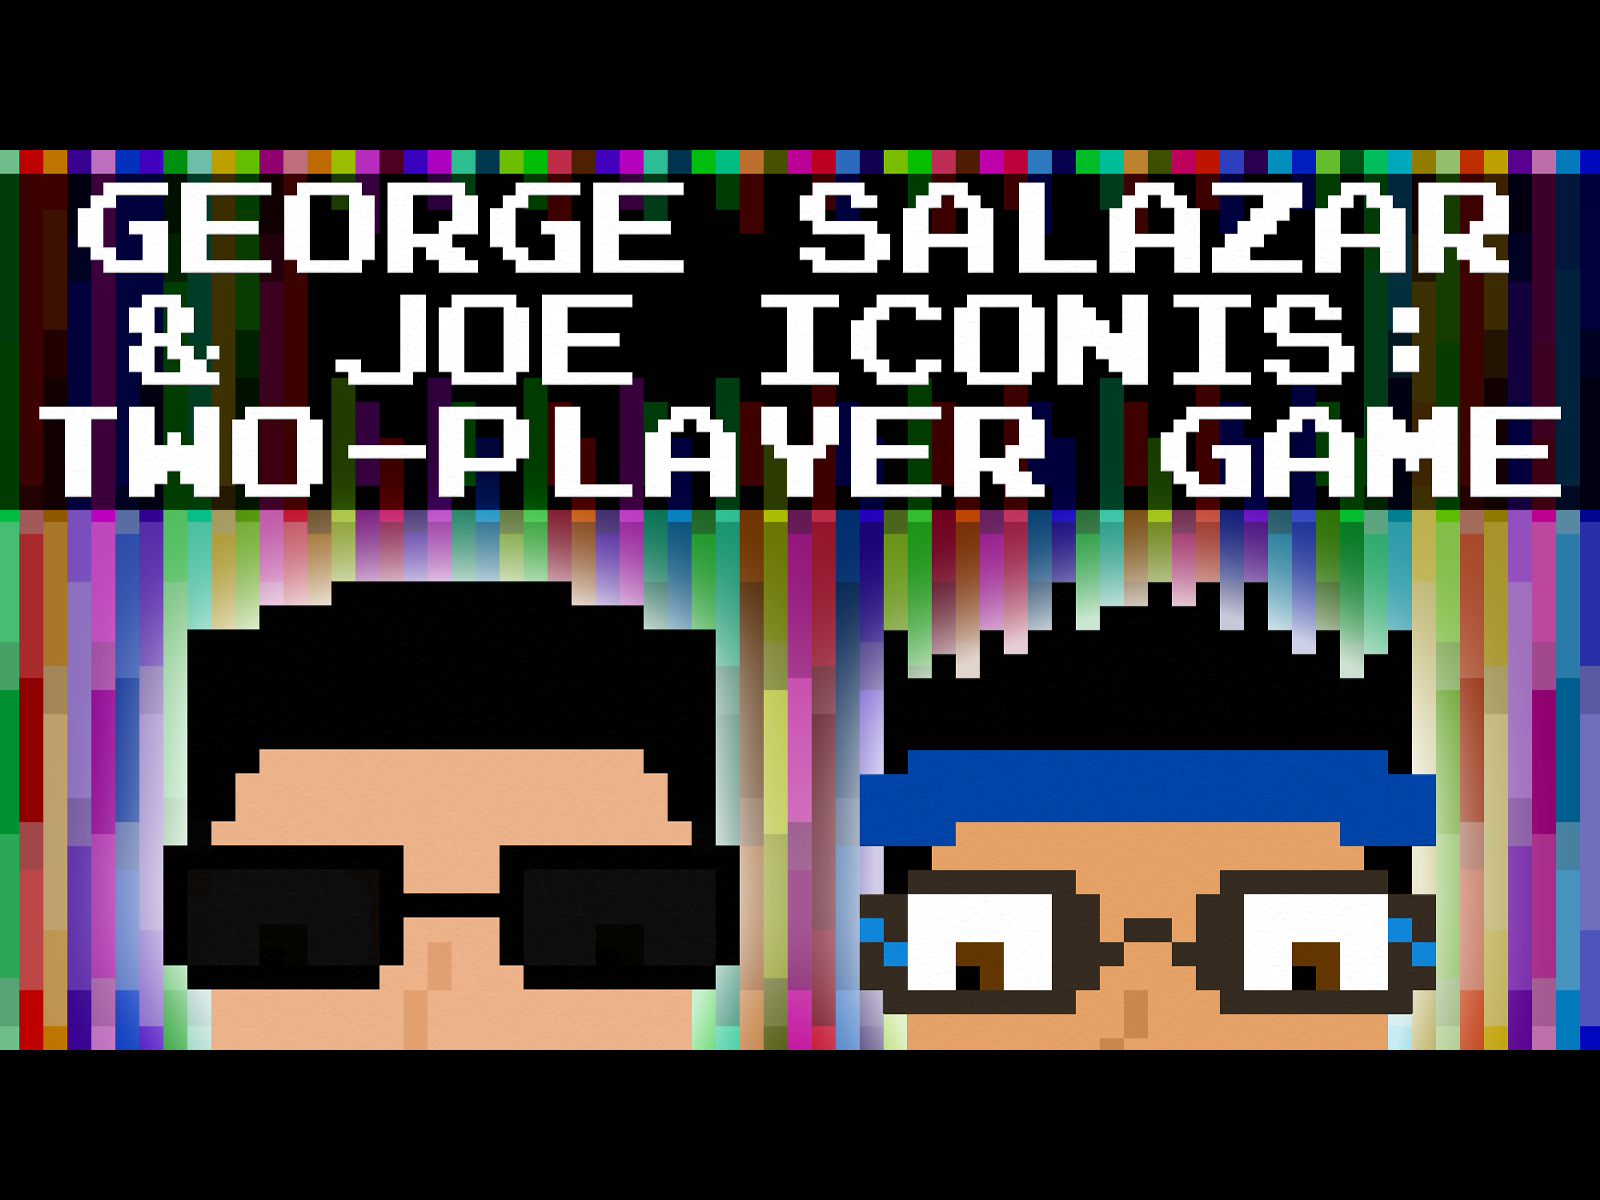 George Salazar & Joe Iconis 'Two-Player Game